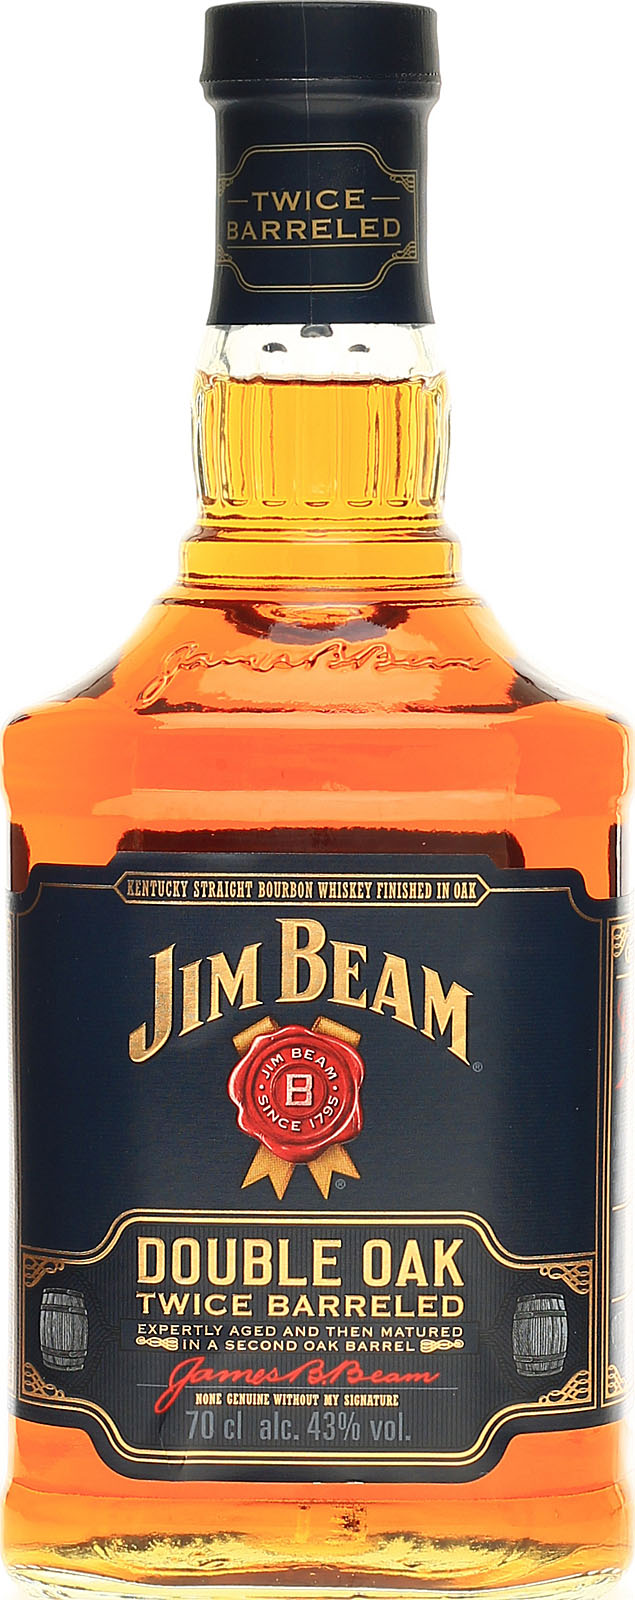 Jim Beam Twice Oak Double Barreled bei Whisky uns im Sh